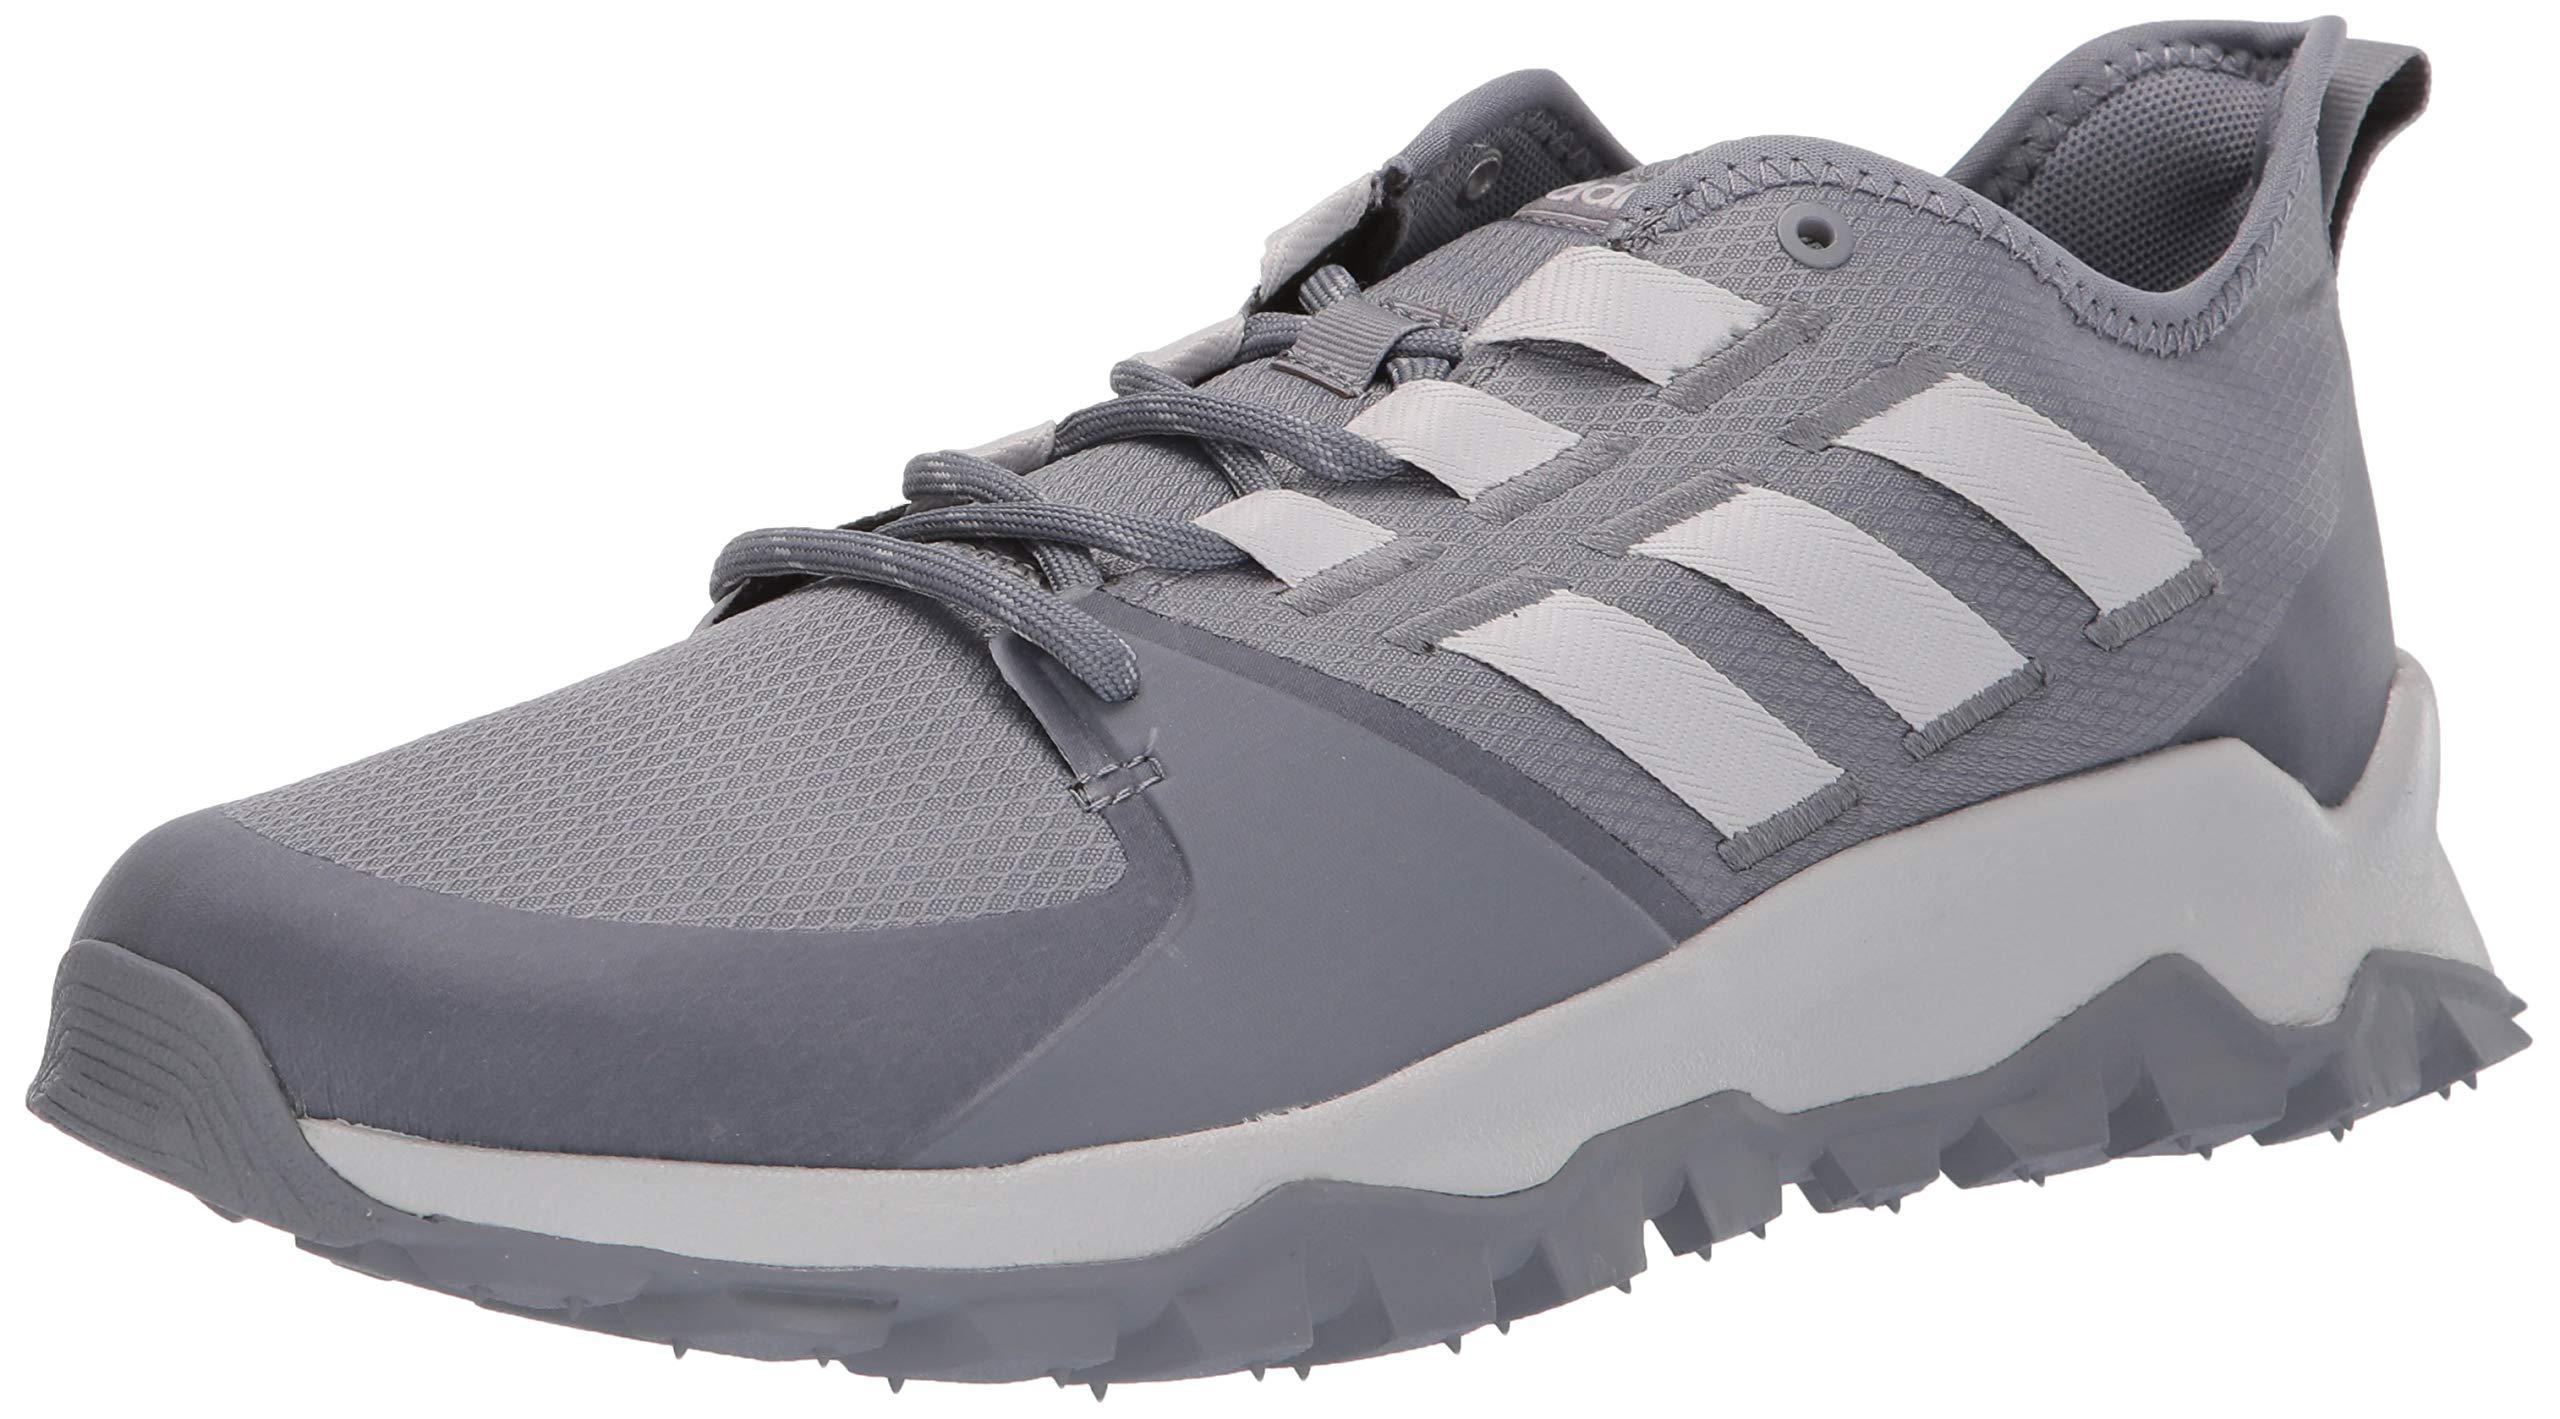 adidas Synthetic Kanadia Trail in Grey/Grey/Grey (Gray) for Men - Lyst